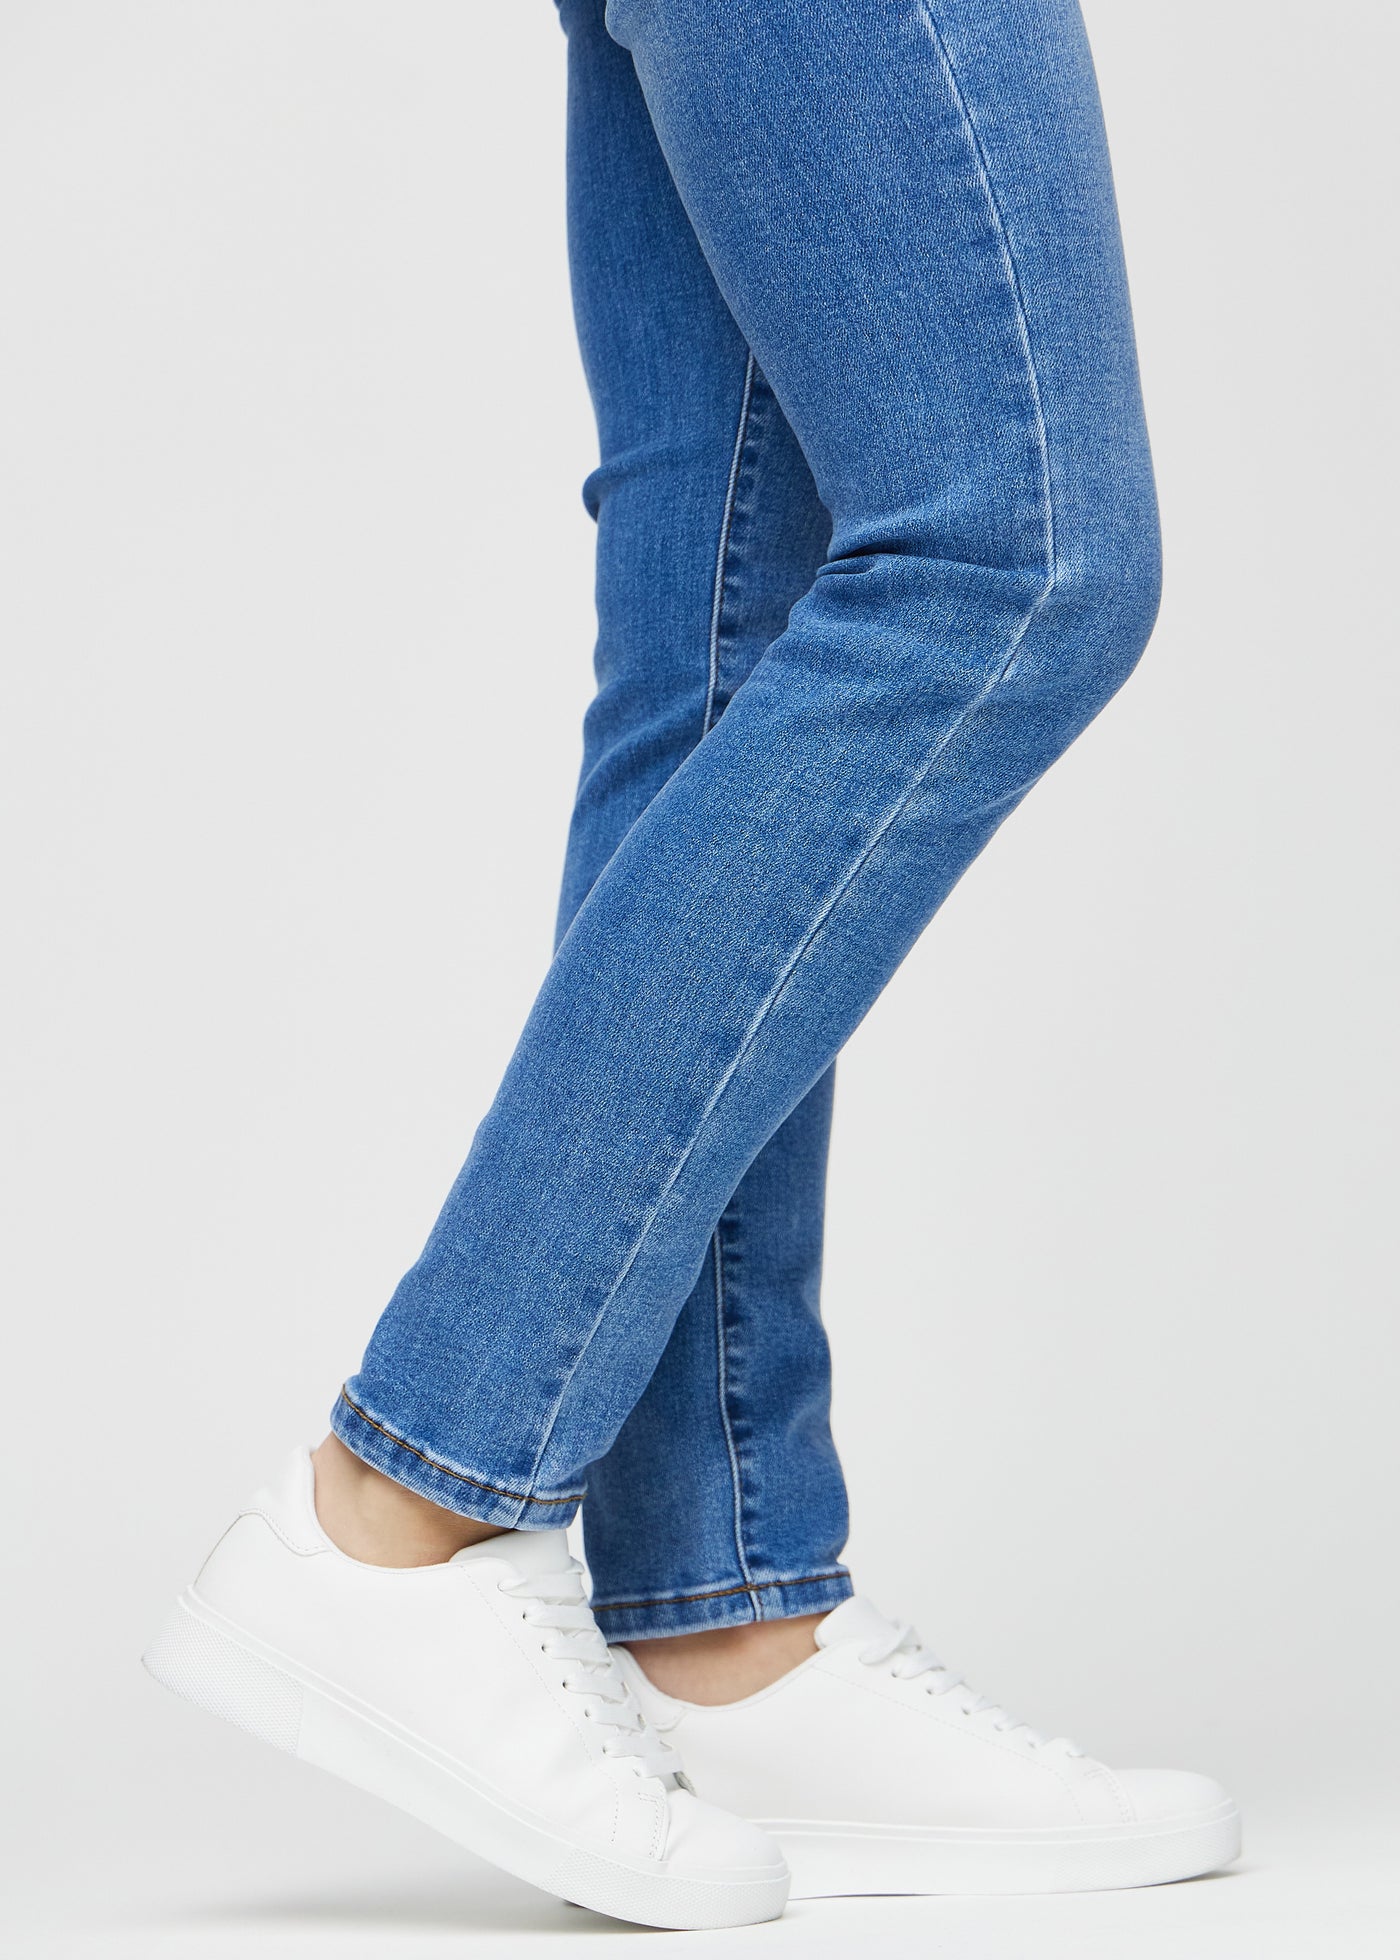 Perfect Jeans - Slim - Rivers™